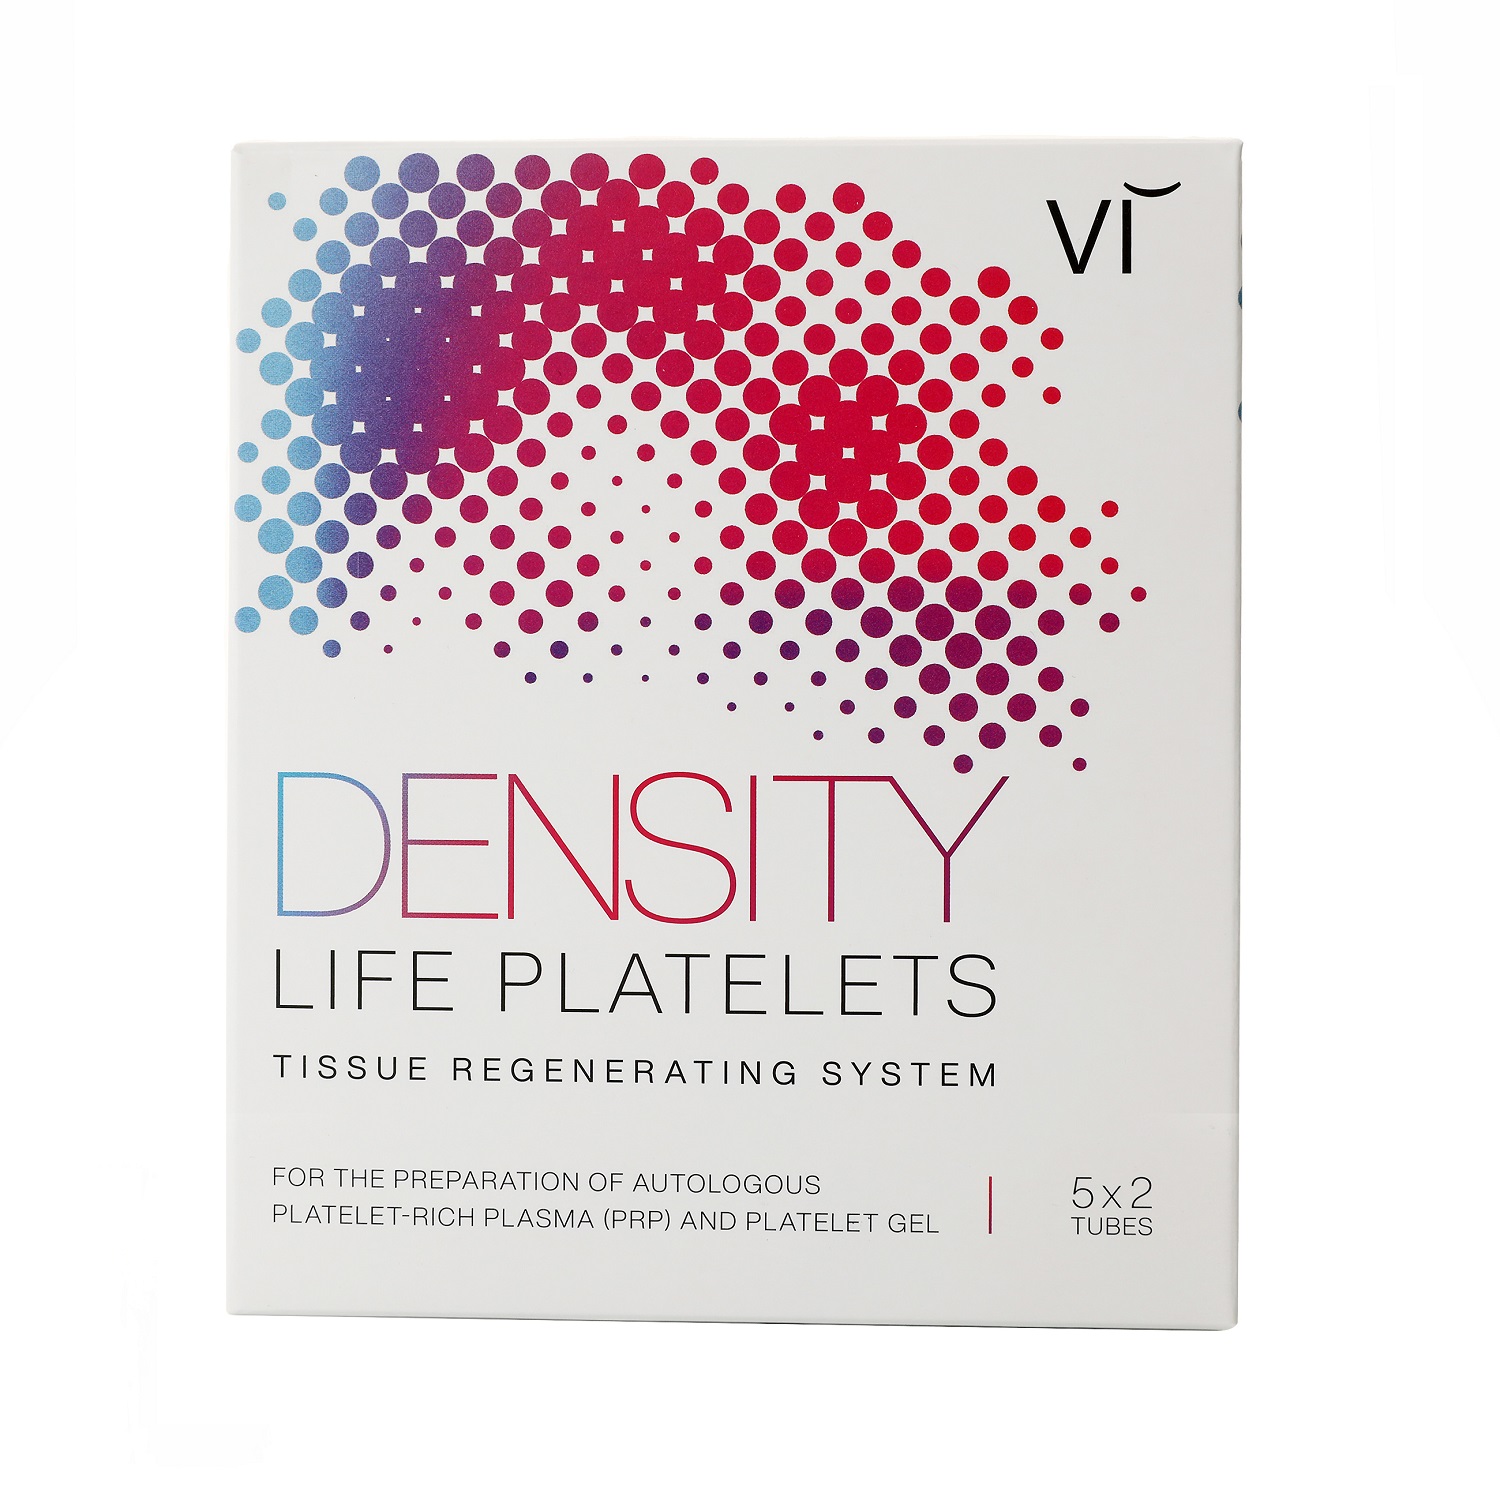 Density Life Platelets